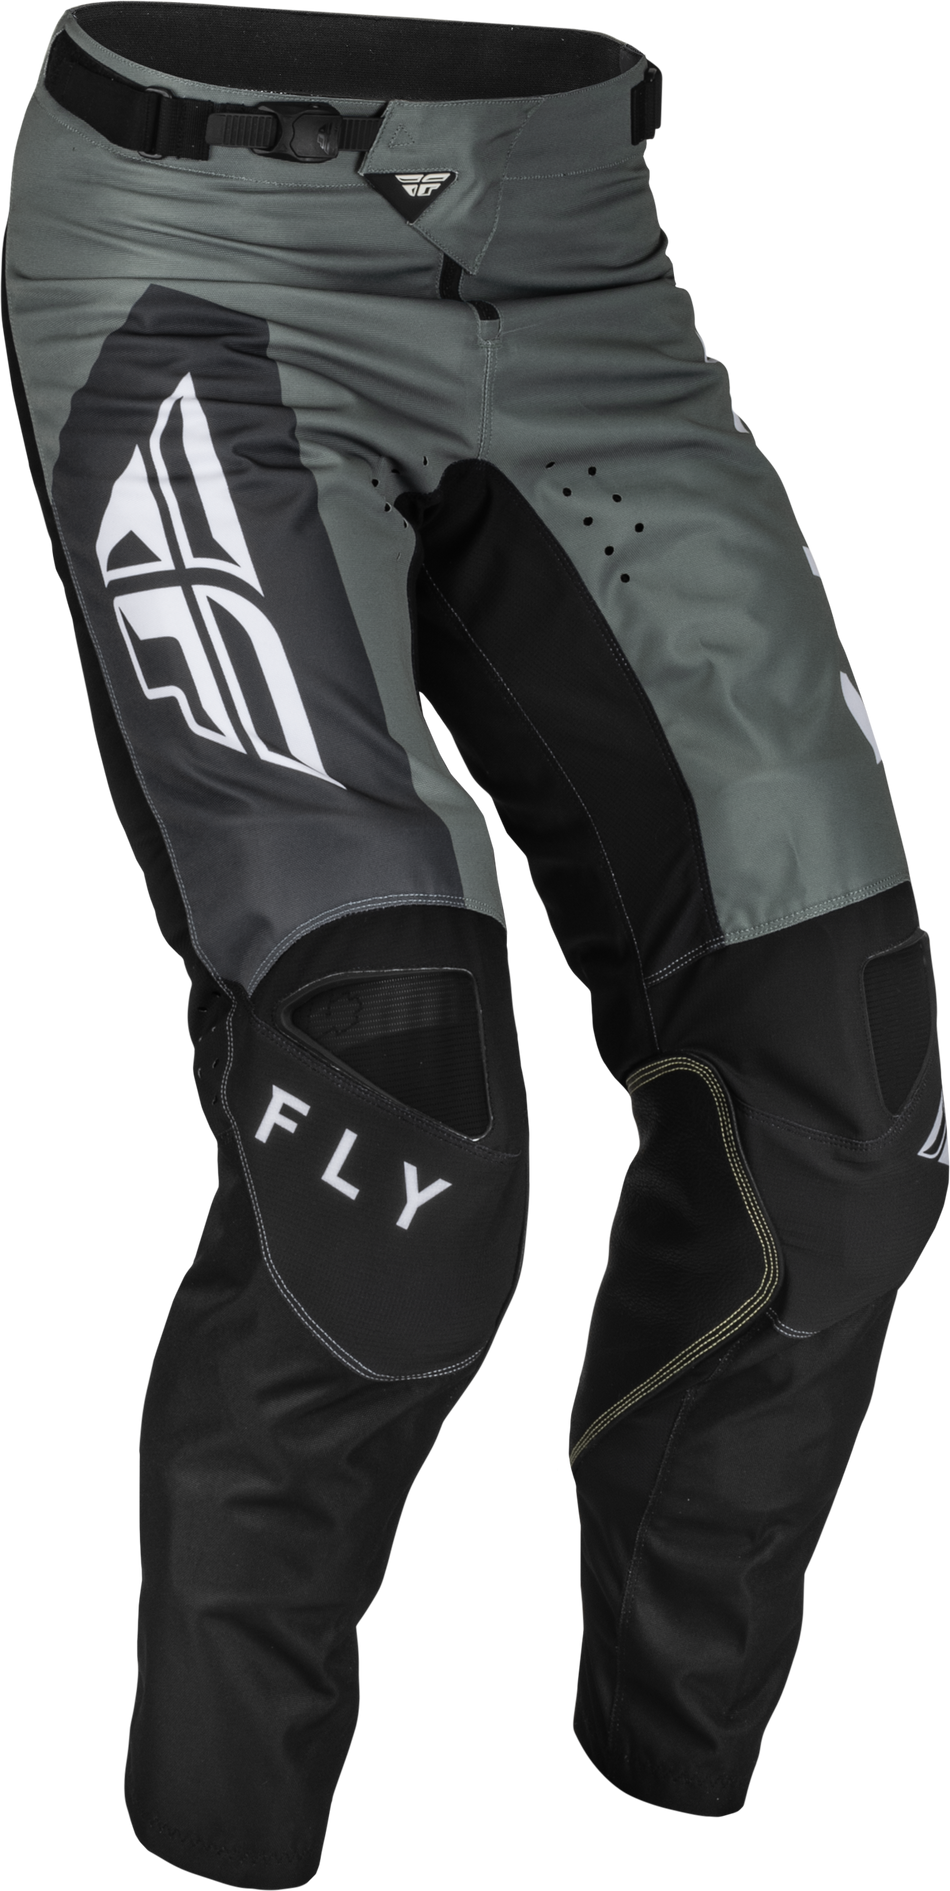 FLY RACING Kinetic Jet Pants Grey/Dark Grey/Black Sz 32 376-53332